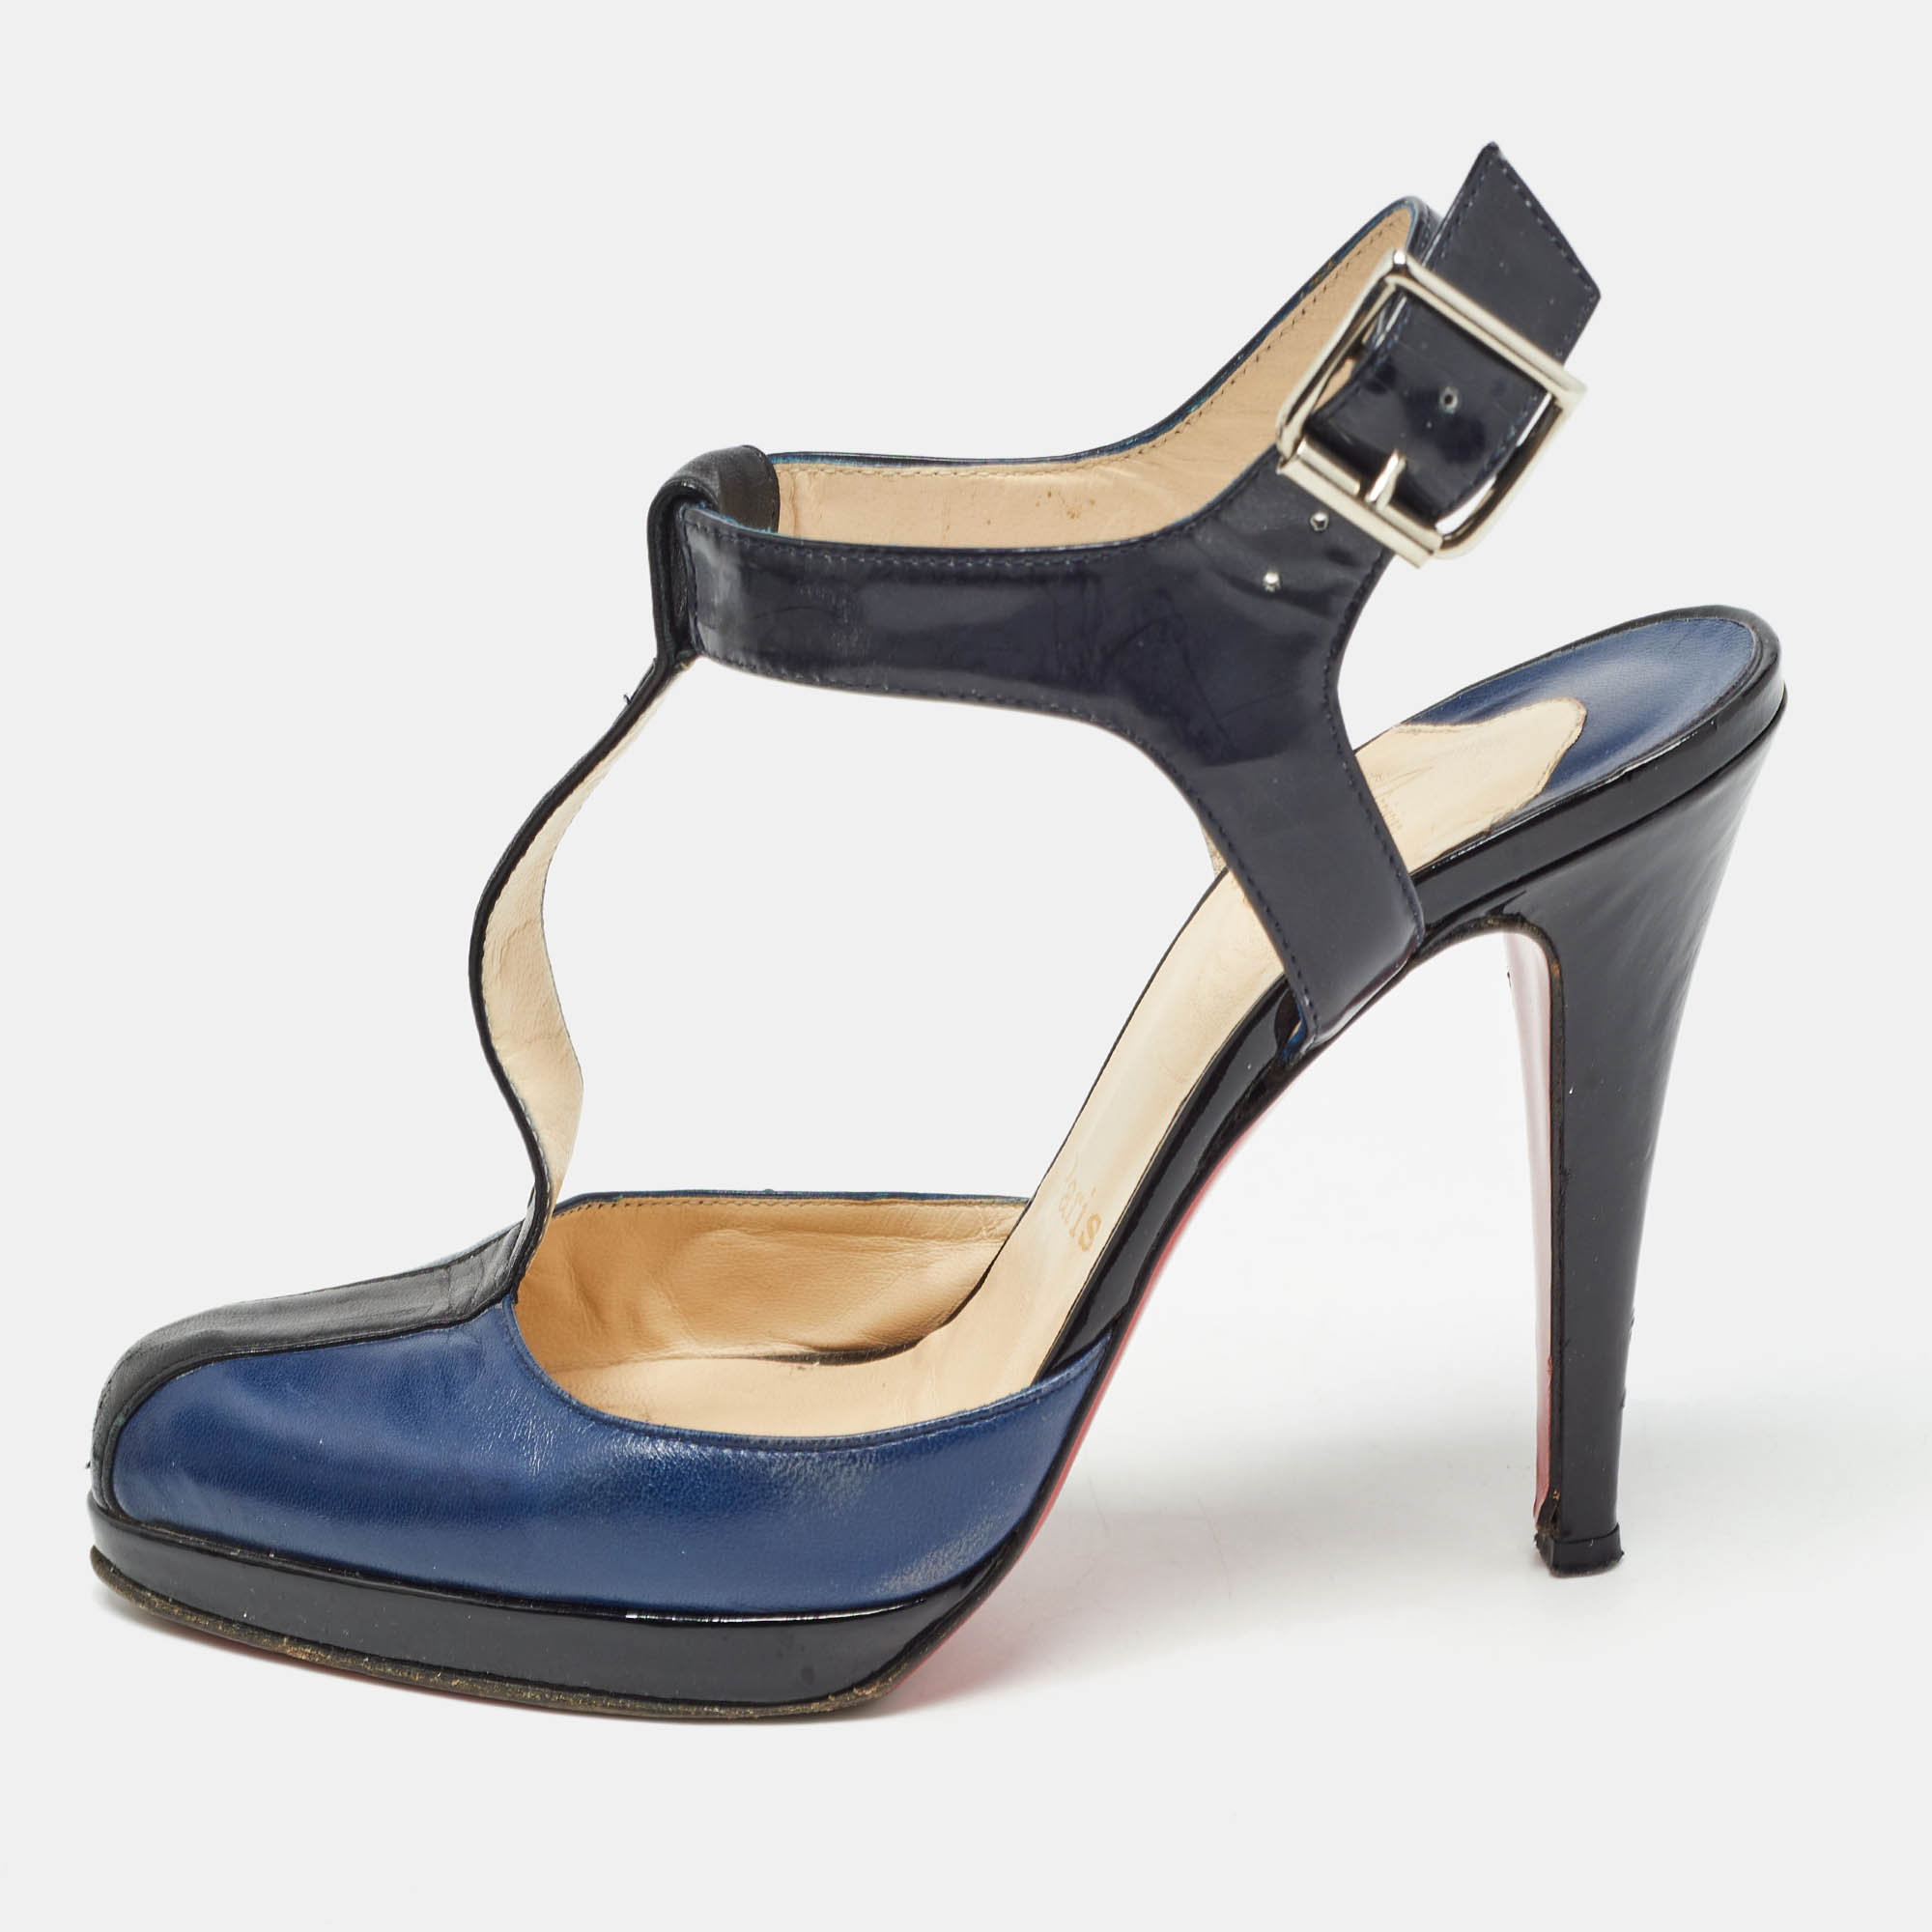 Christian louboutin black/blue leather t-bar ankle strap pumps size 36.5